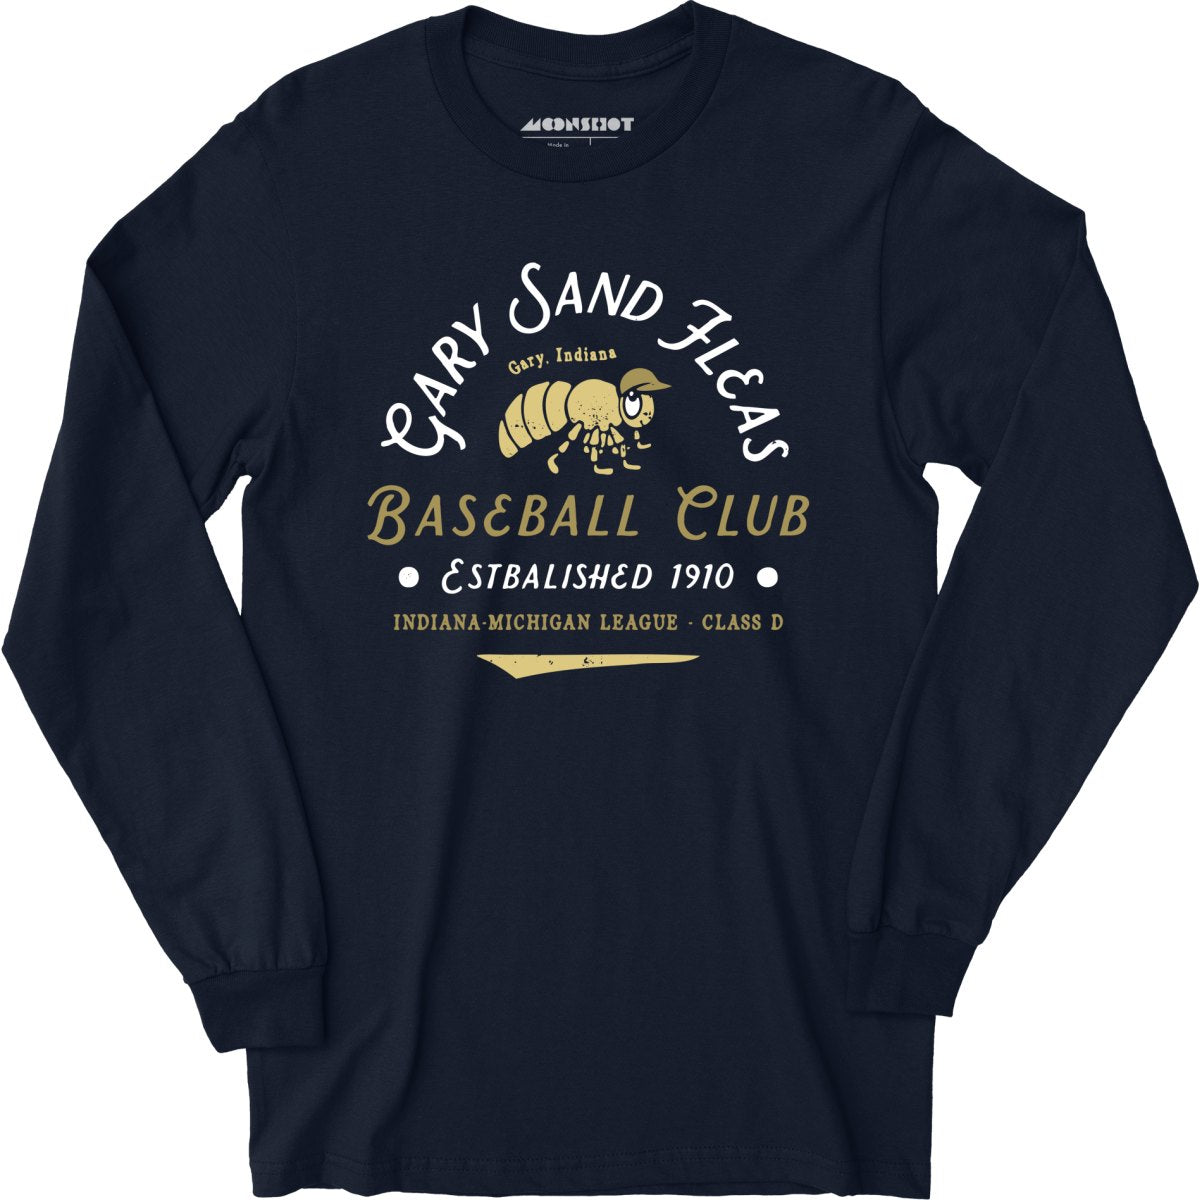 Gary Sand Fleas - Indiana - Vintage Defunct Baseball Teams - Long Sleeve T-Shirt